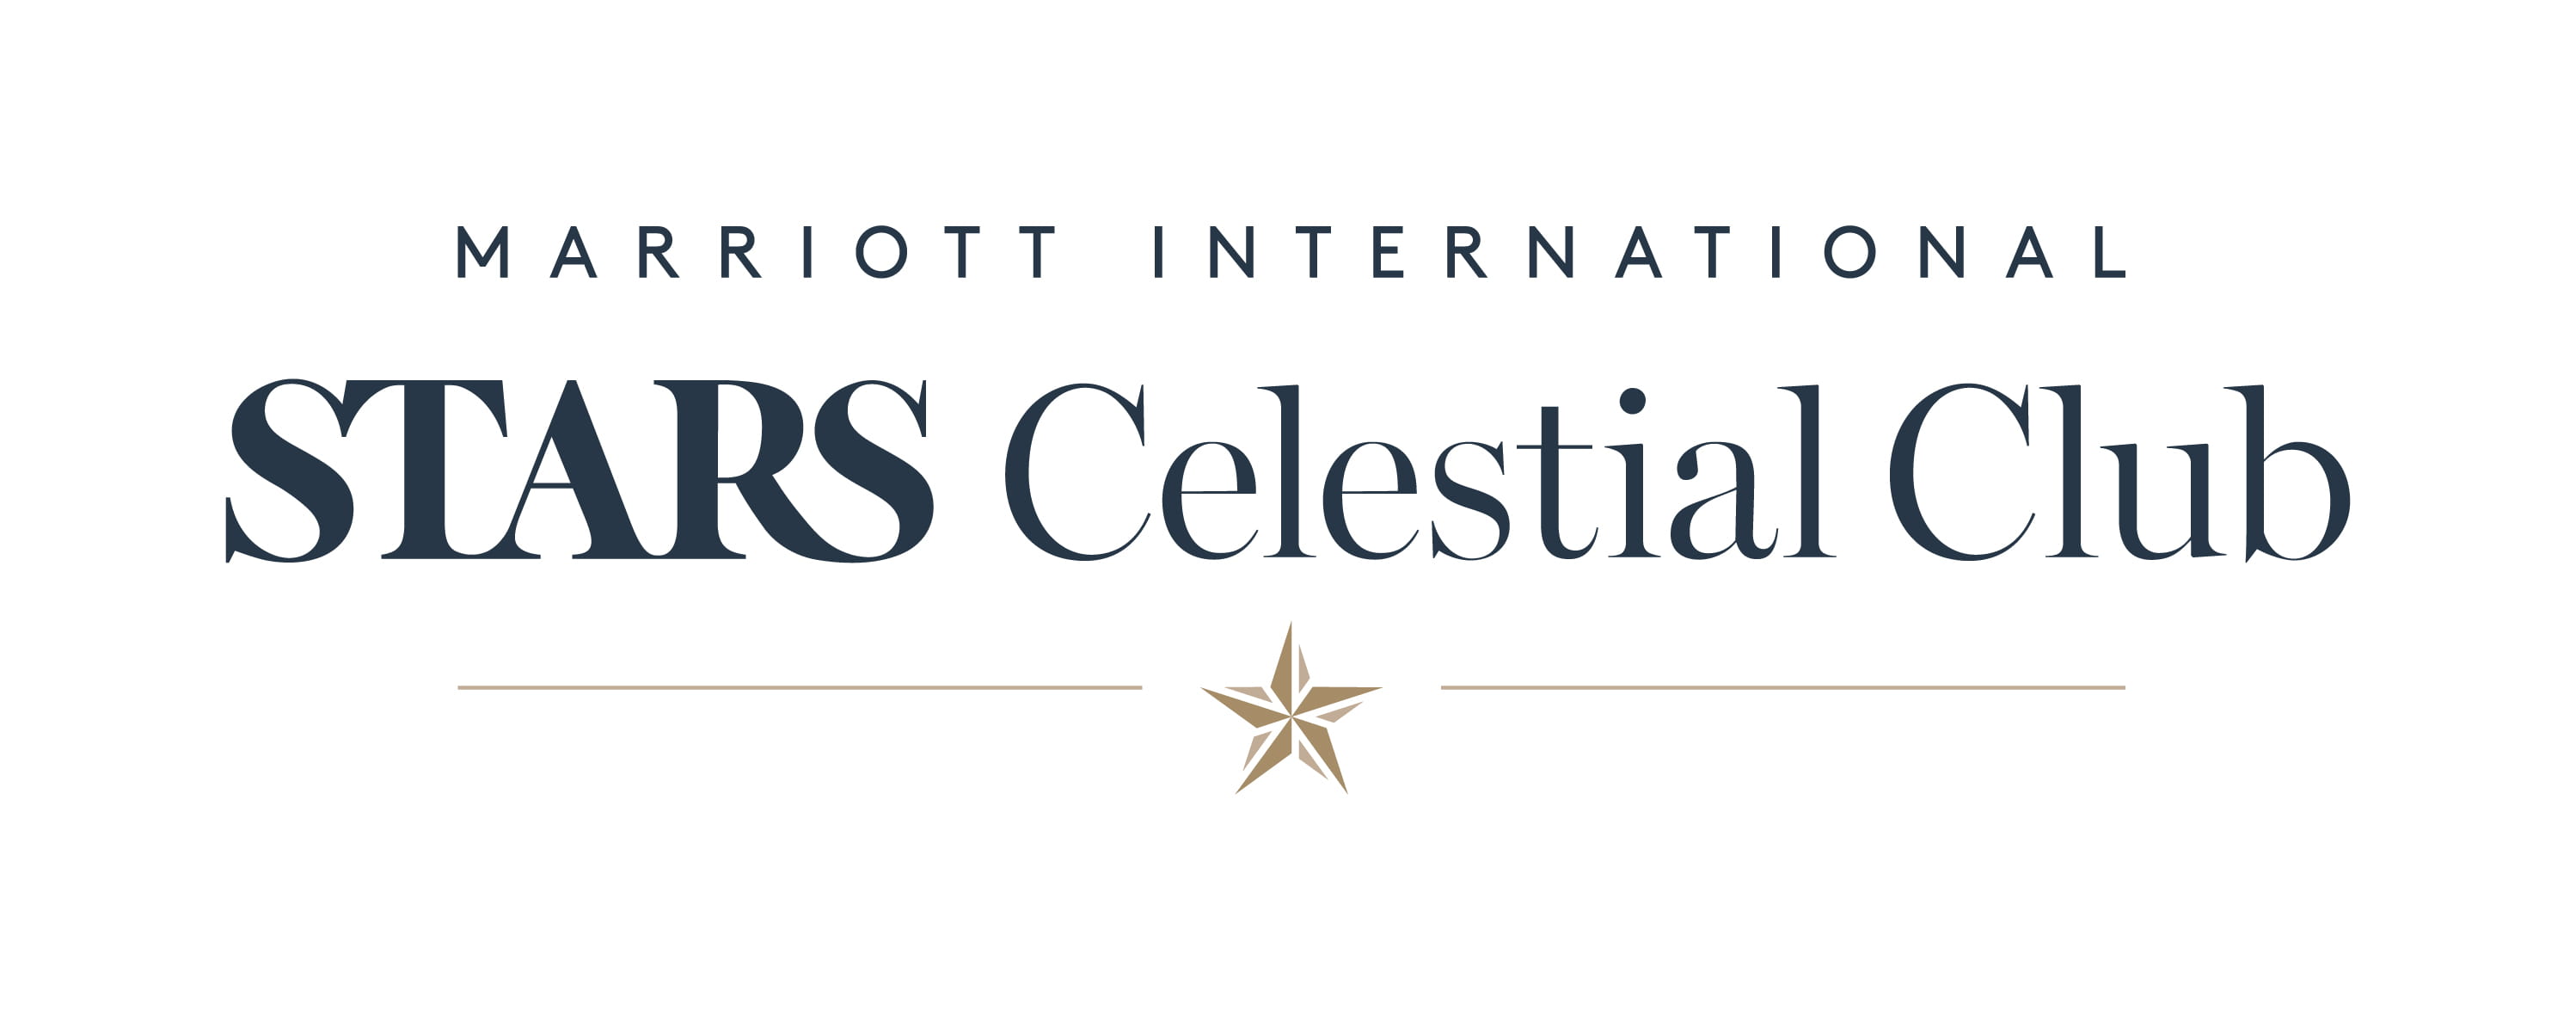 Marriott International Stars Celestial Club